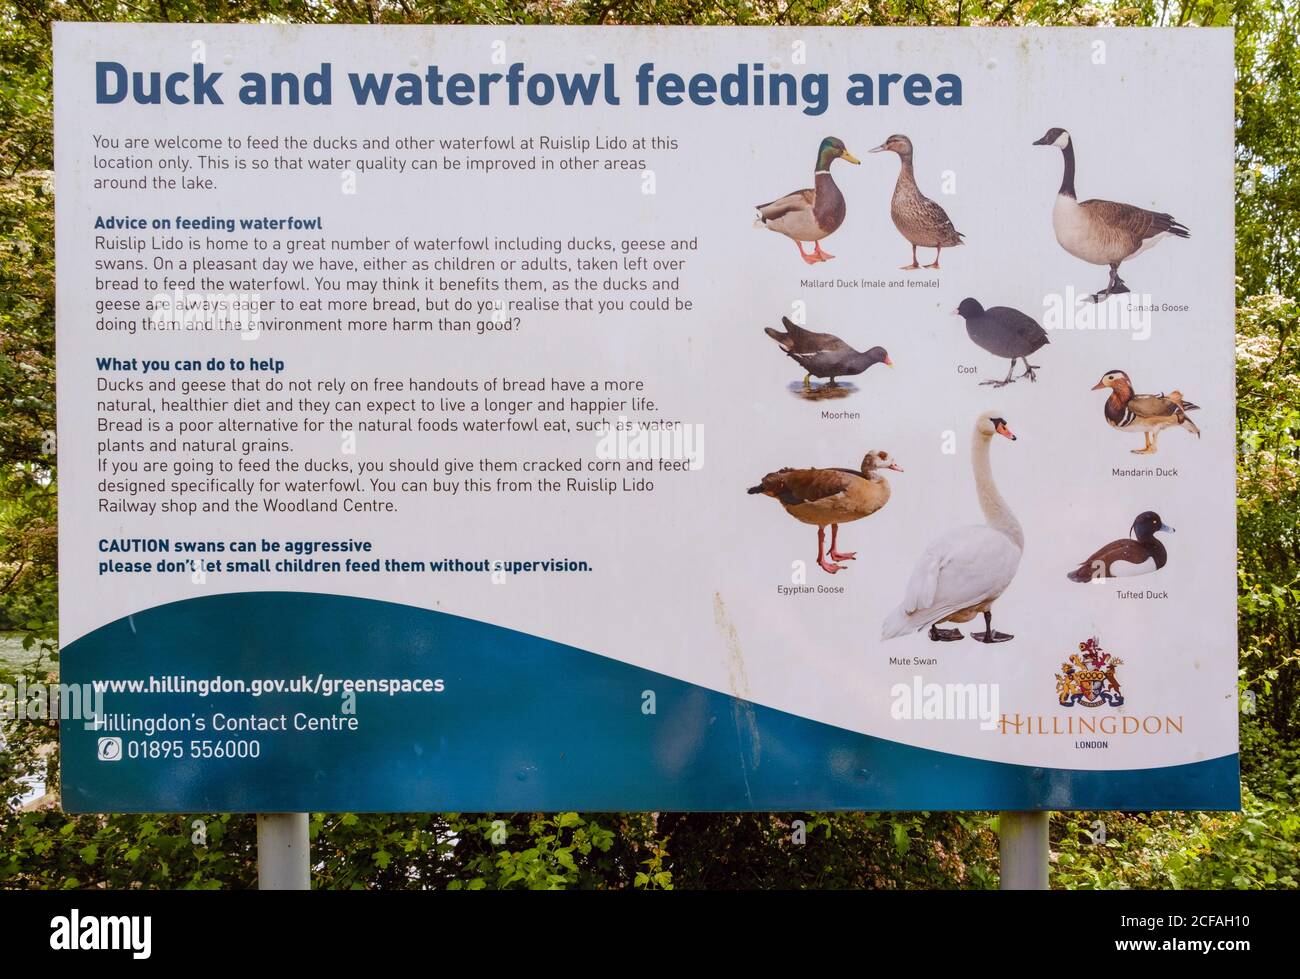 Signage for Ruislip Lido reservoir duck and waterfowl feeding area. Ruislip Hillingdon, North West London, England, UK. Stock Photo